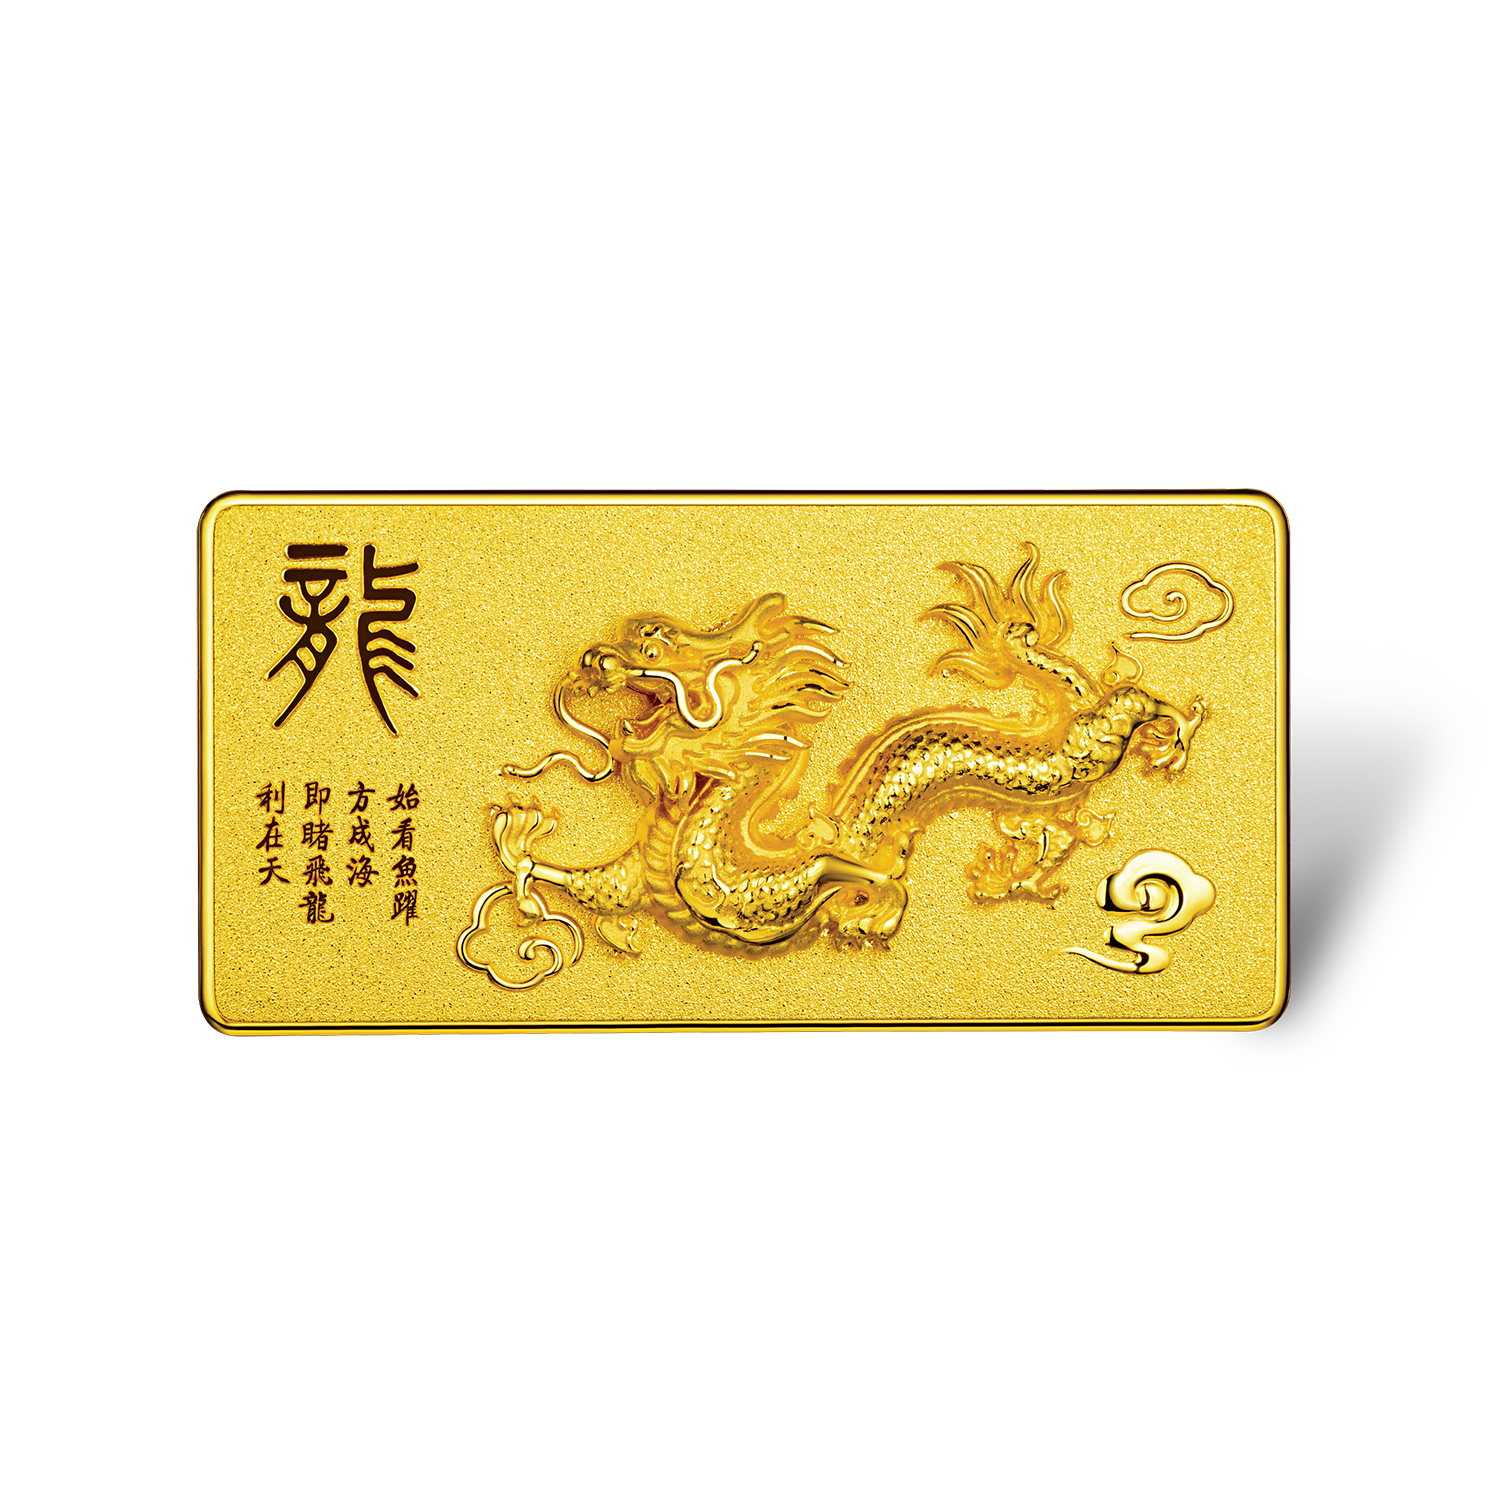 Fortune Dragon Collection "Auspicious Dragon" 3D Relief Gold Bar